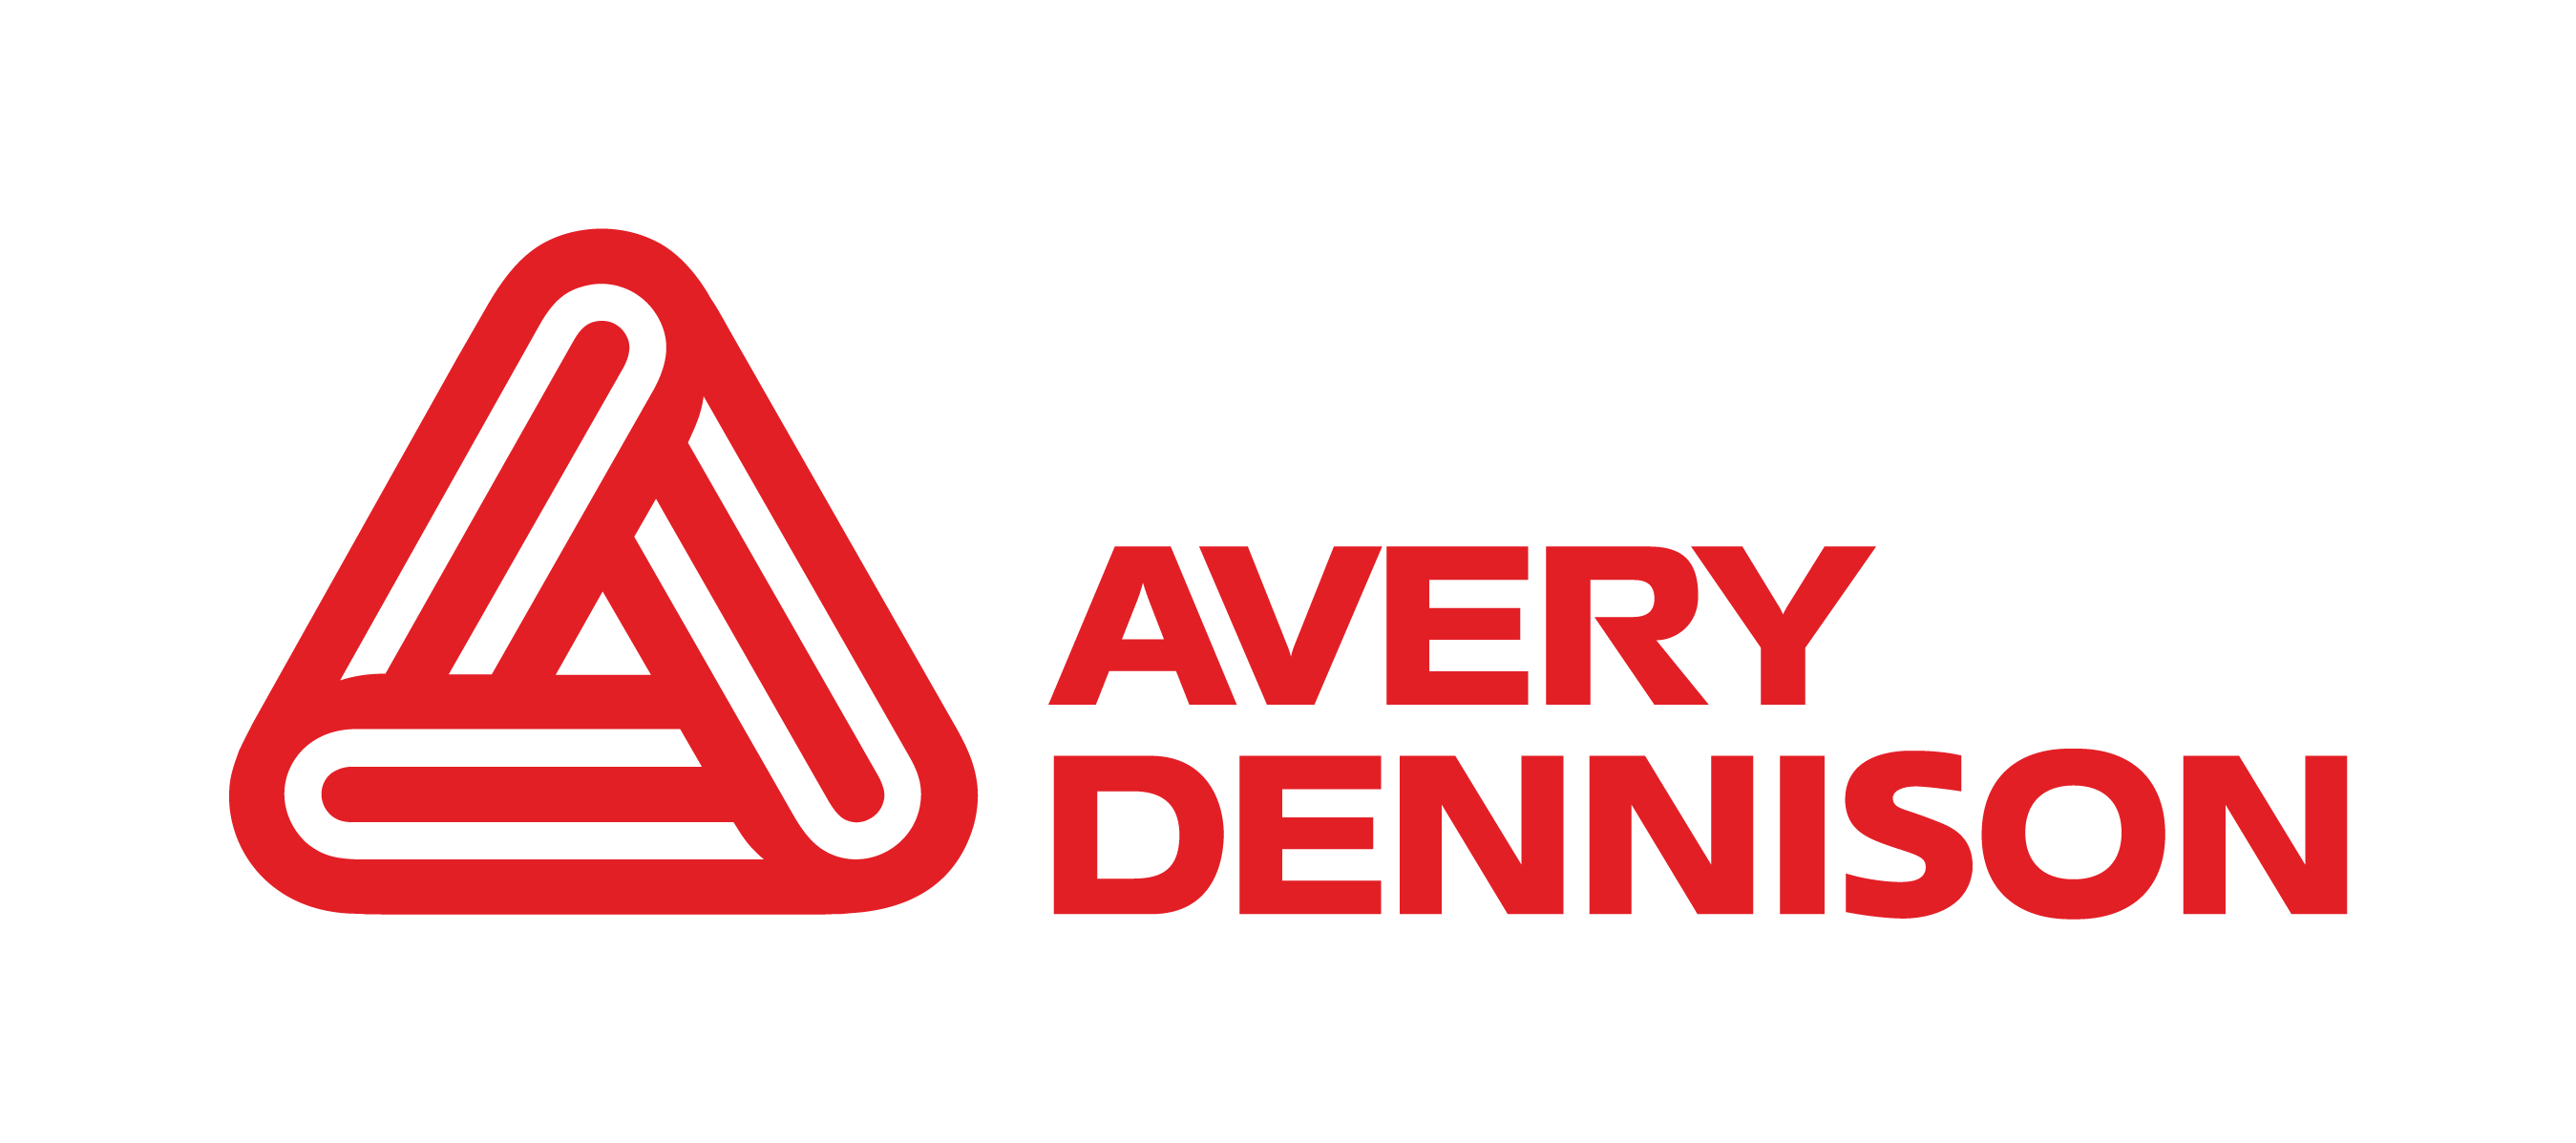 Avery Denison